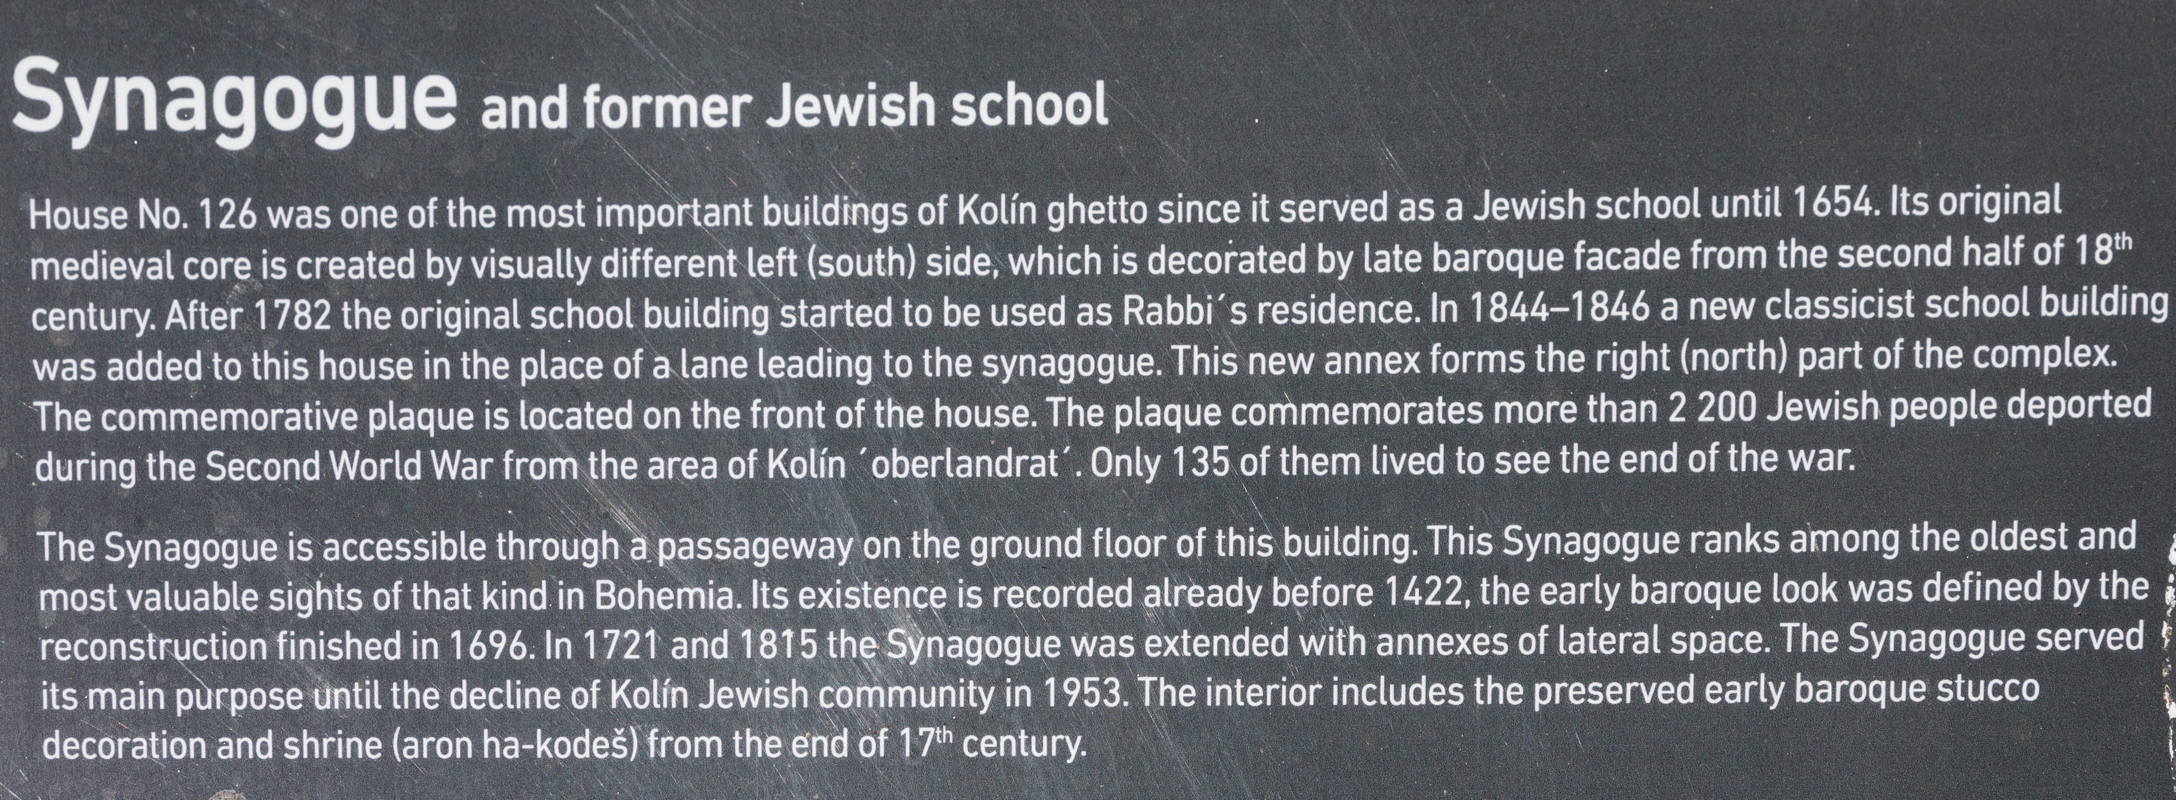 Description of the Jewish community